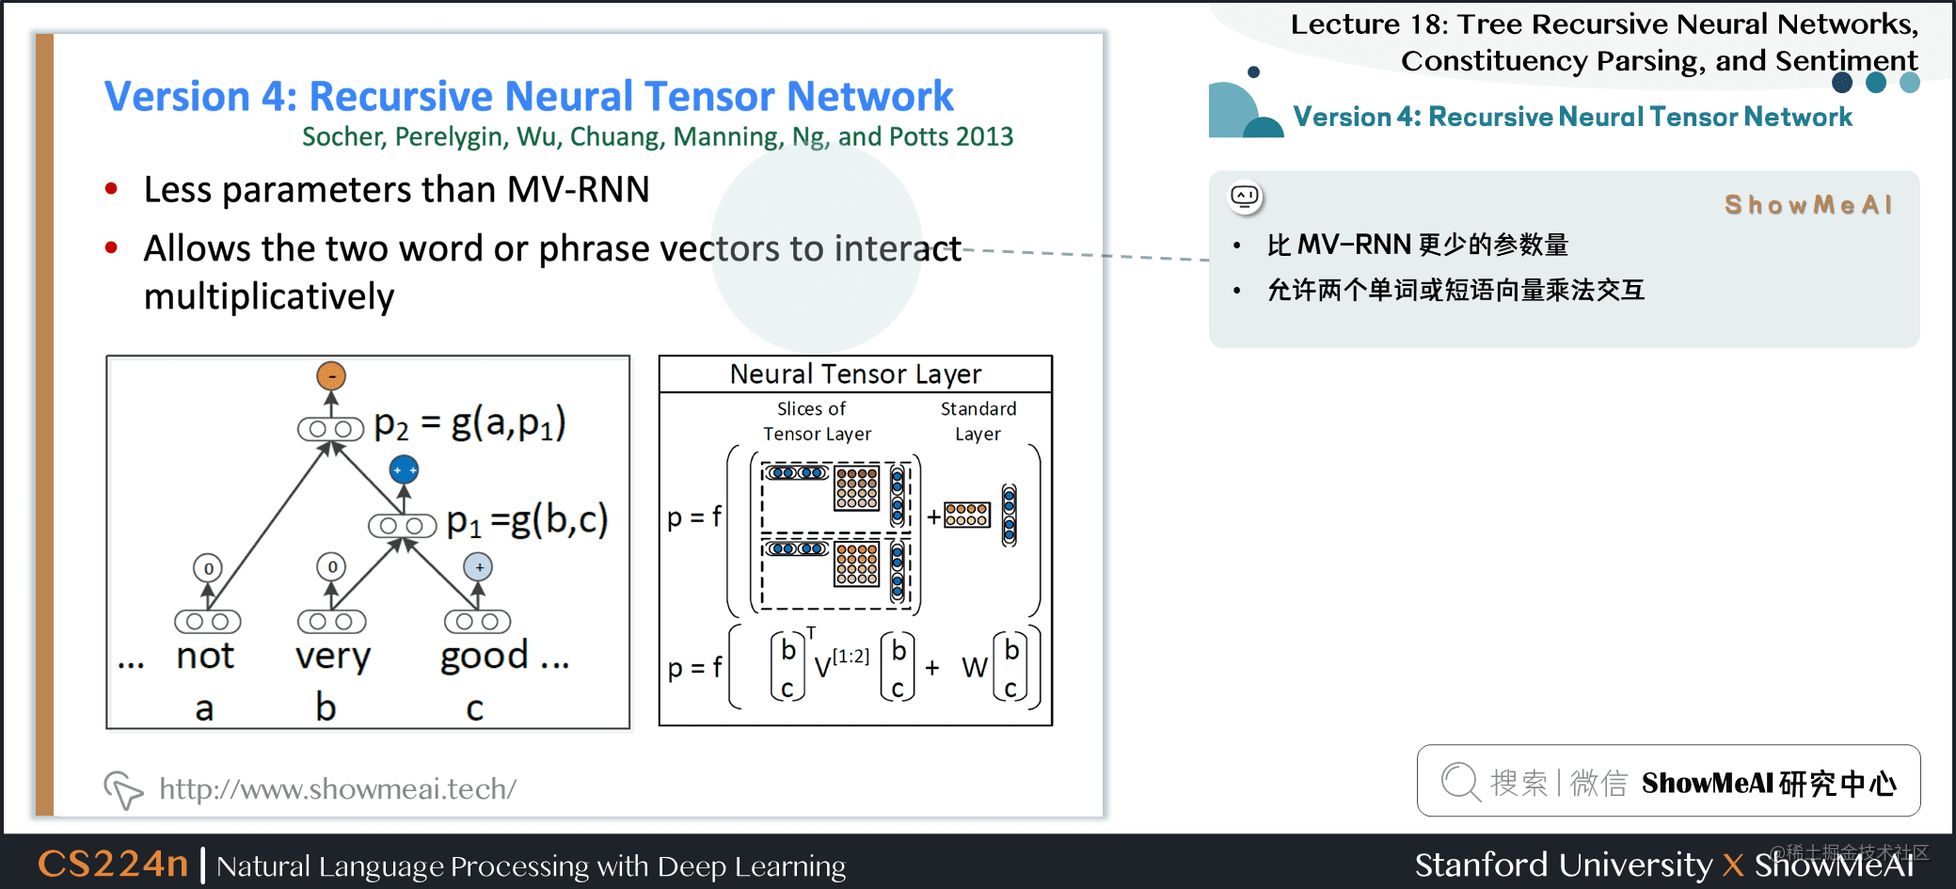 Version 4: Recursive Neural Tensor Network